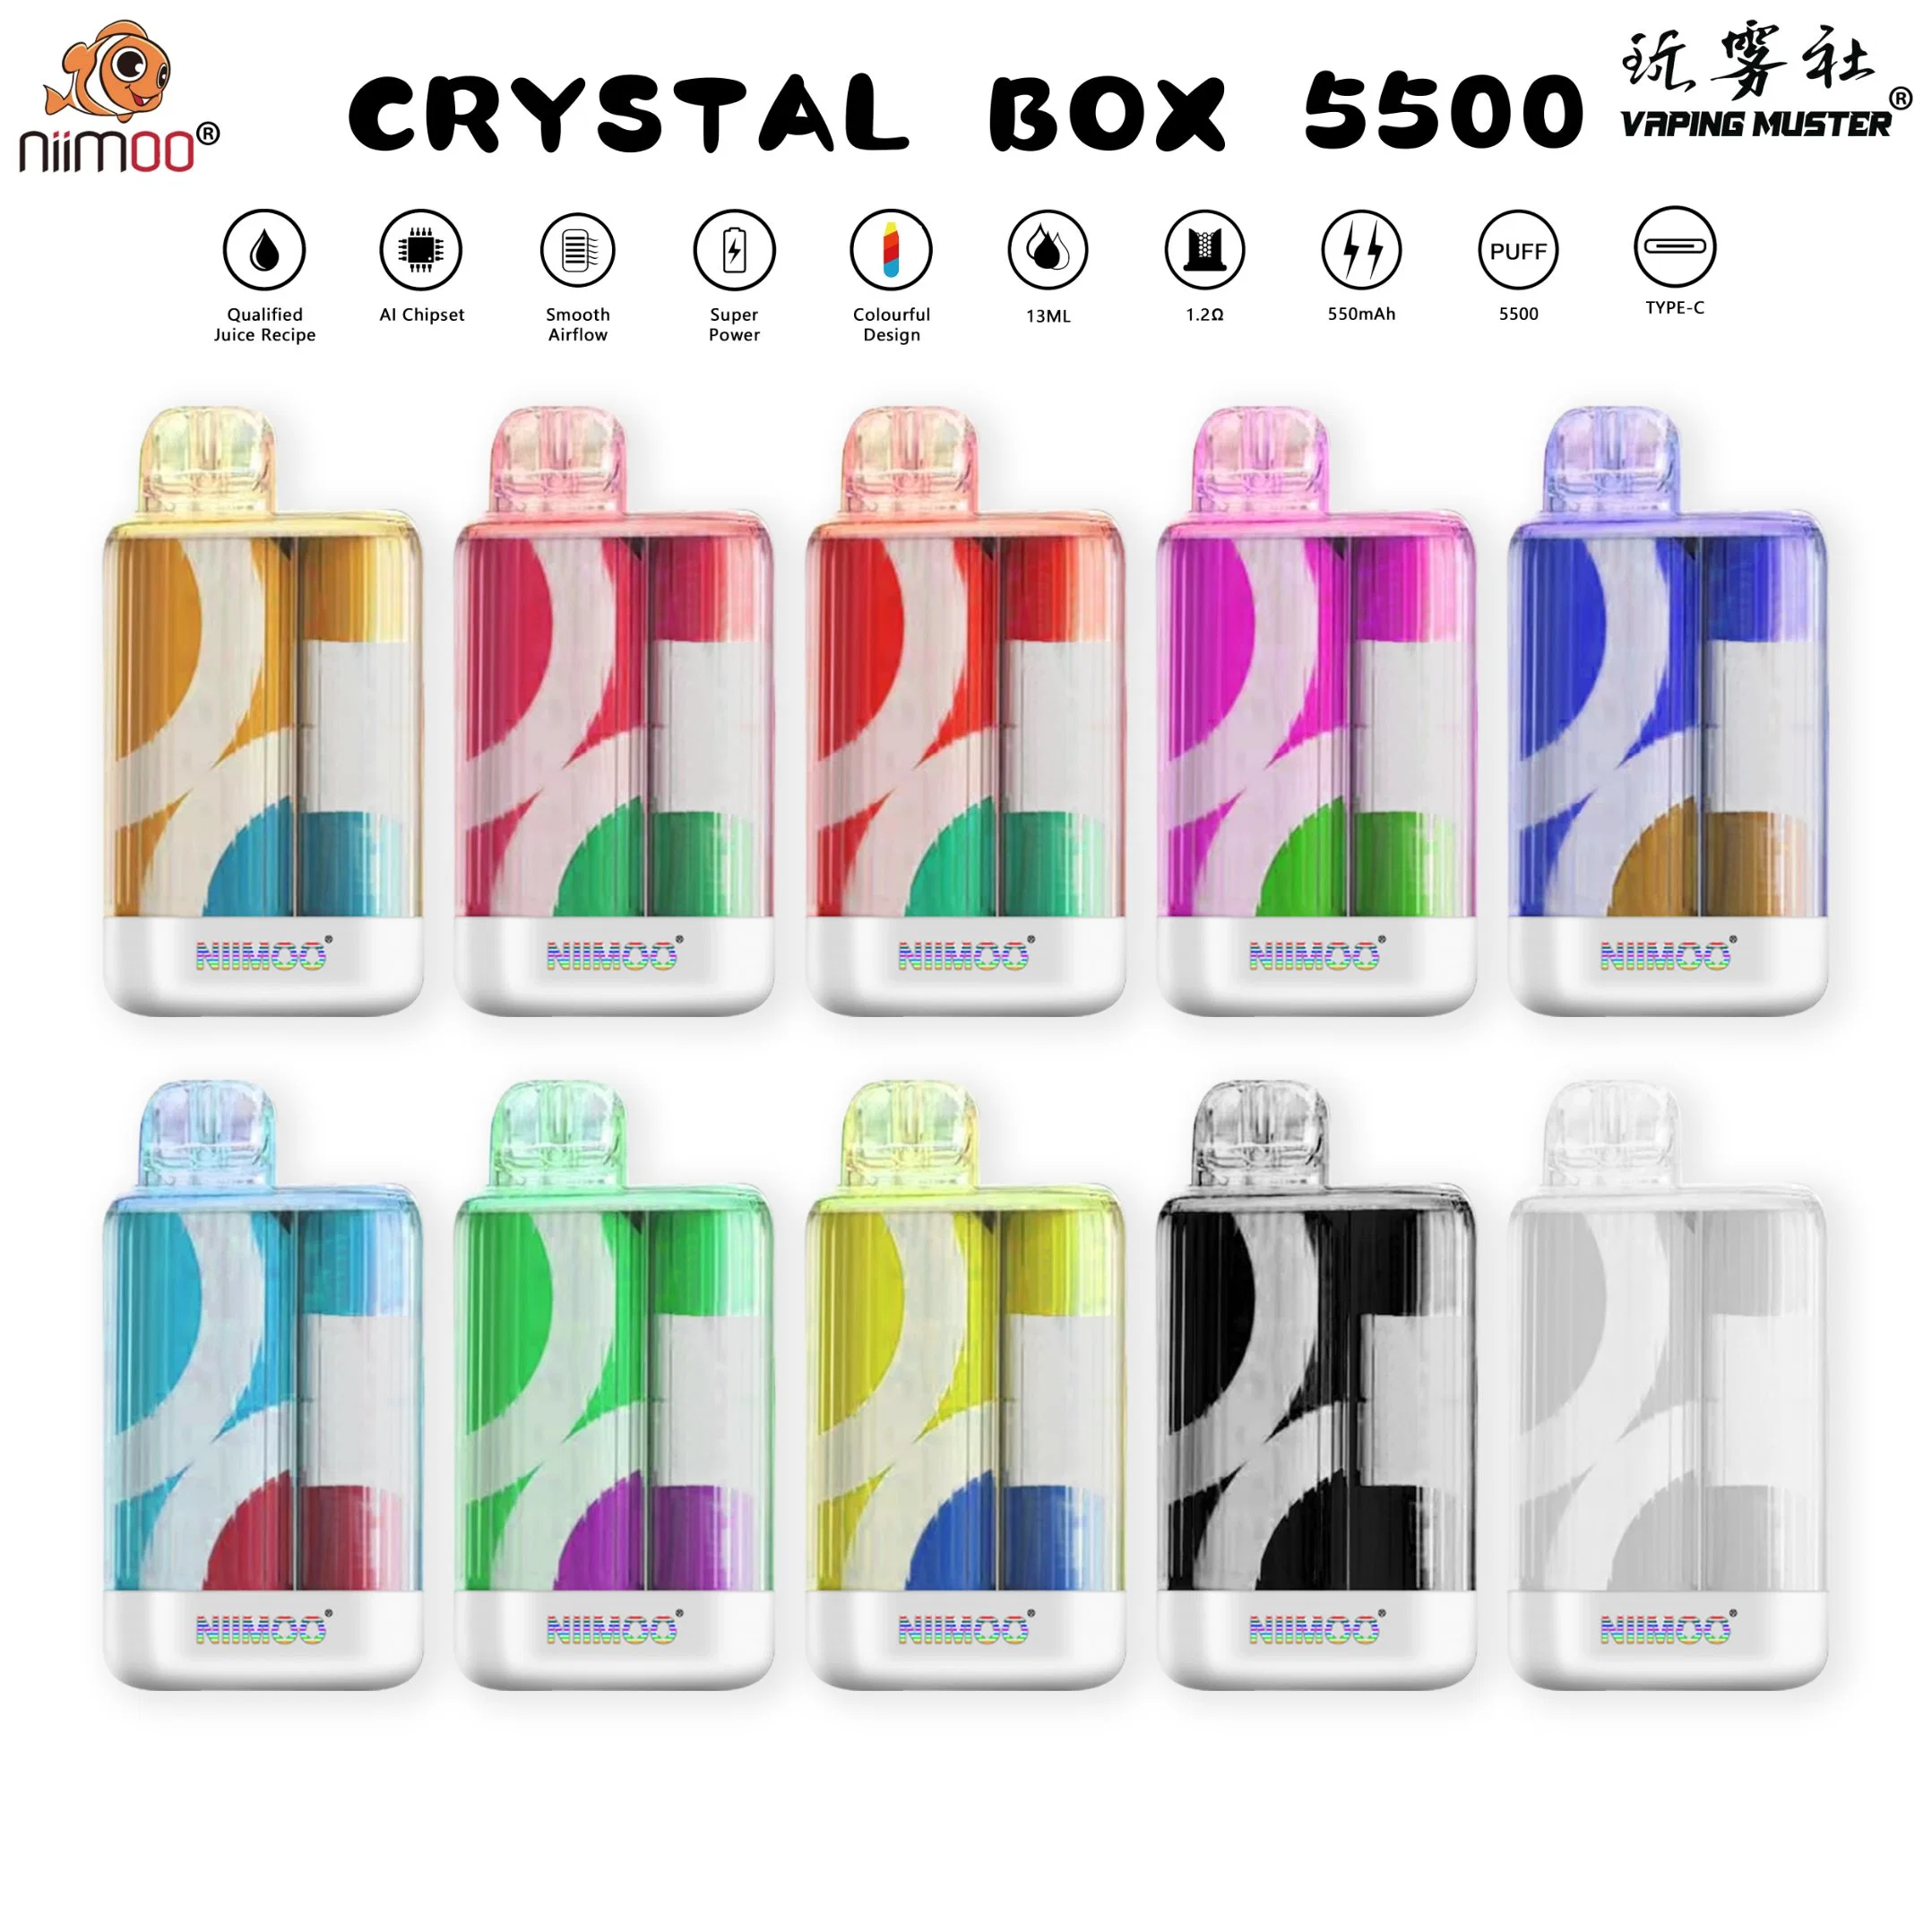 Niimoo Crystal Box 5500 Wholesale Disposable Vape Wholesale Electronic Cigarette 550mAh Cobalt Battery Type C